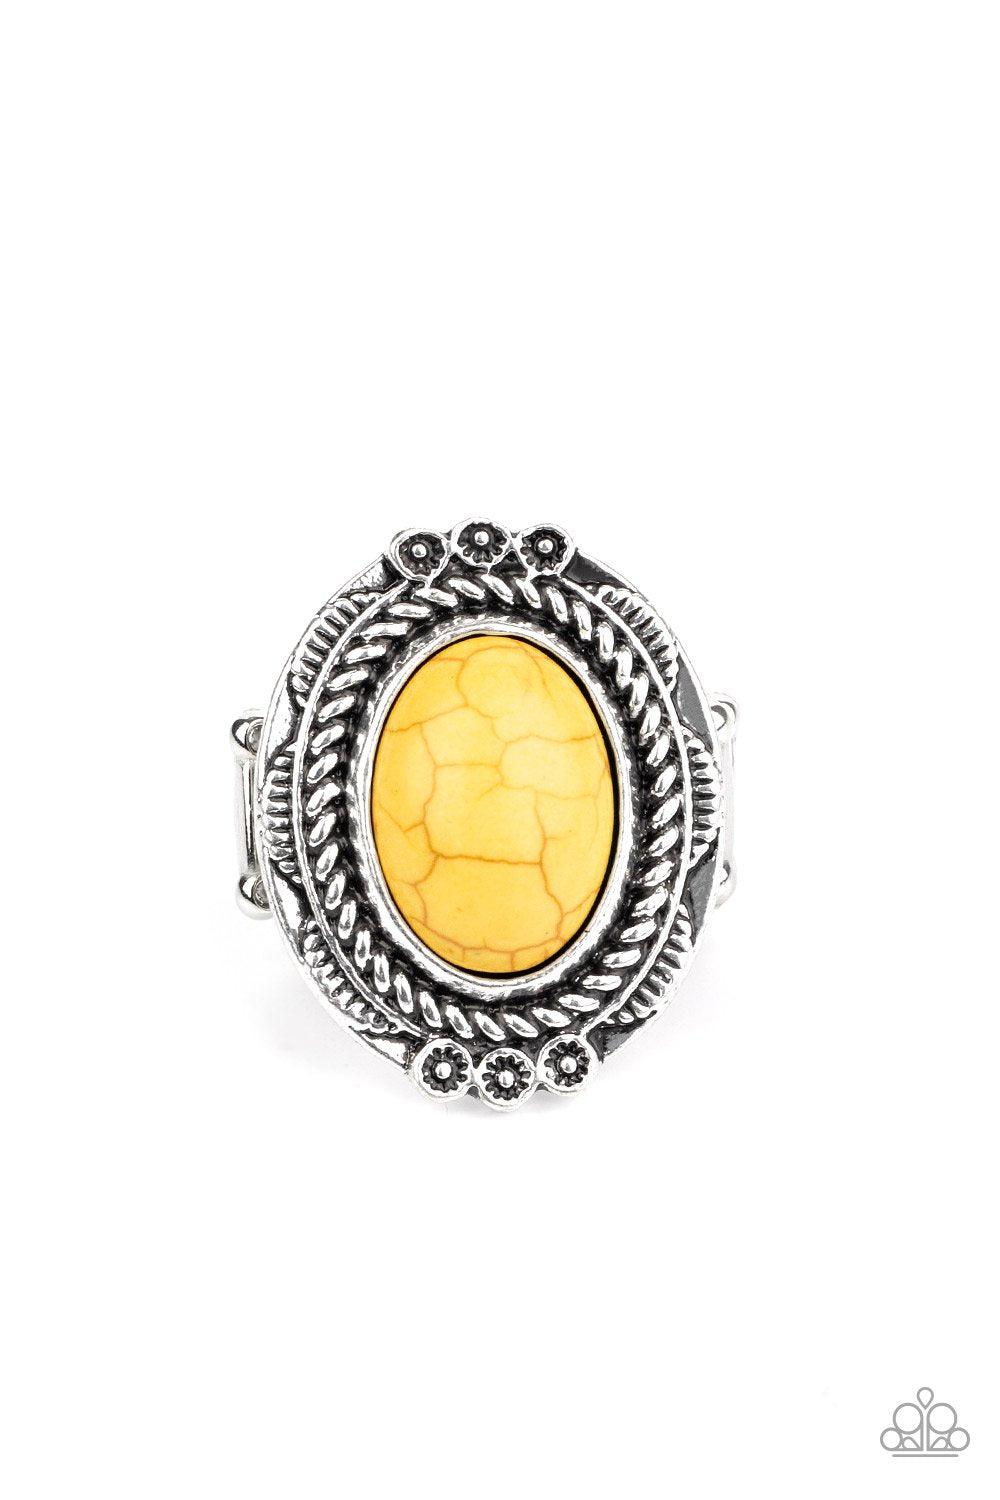 Tumblin' Tumbleweeds Yellow Stone Ring - Paparazzi Accessories - lightbox -CarasShop.com - $5 Jewelry by Cara Jewels